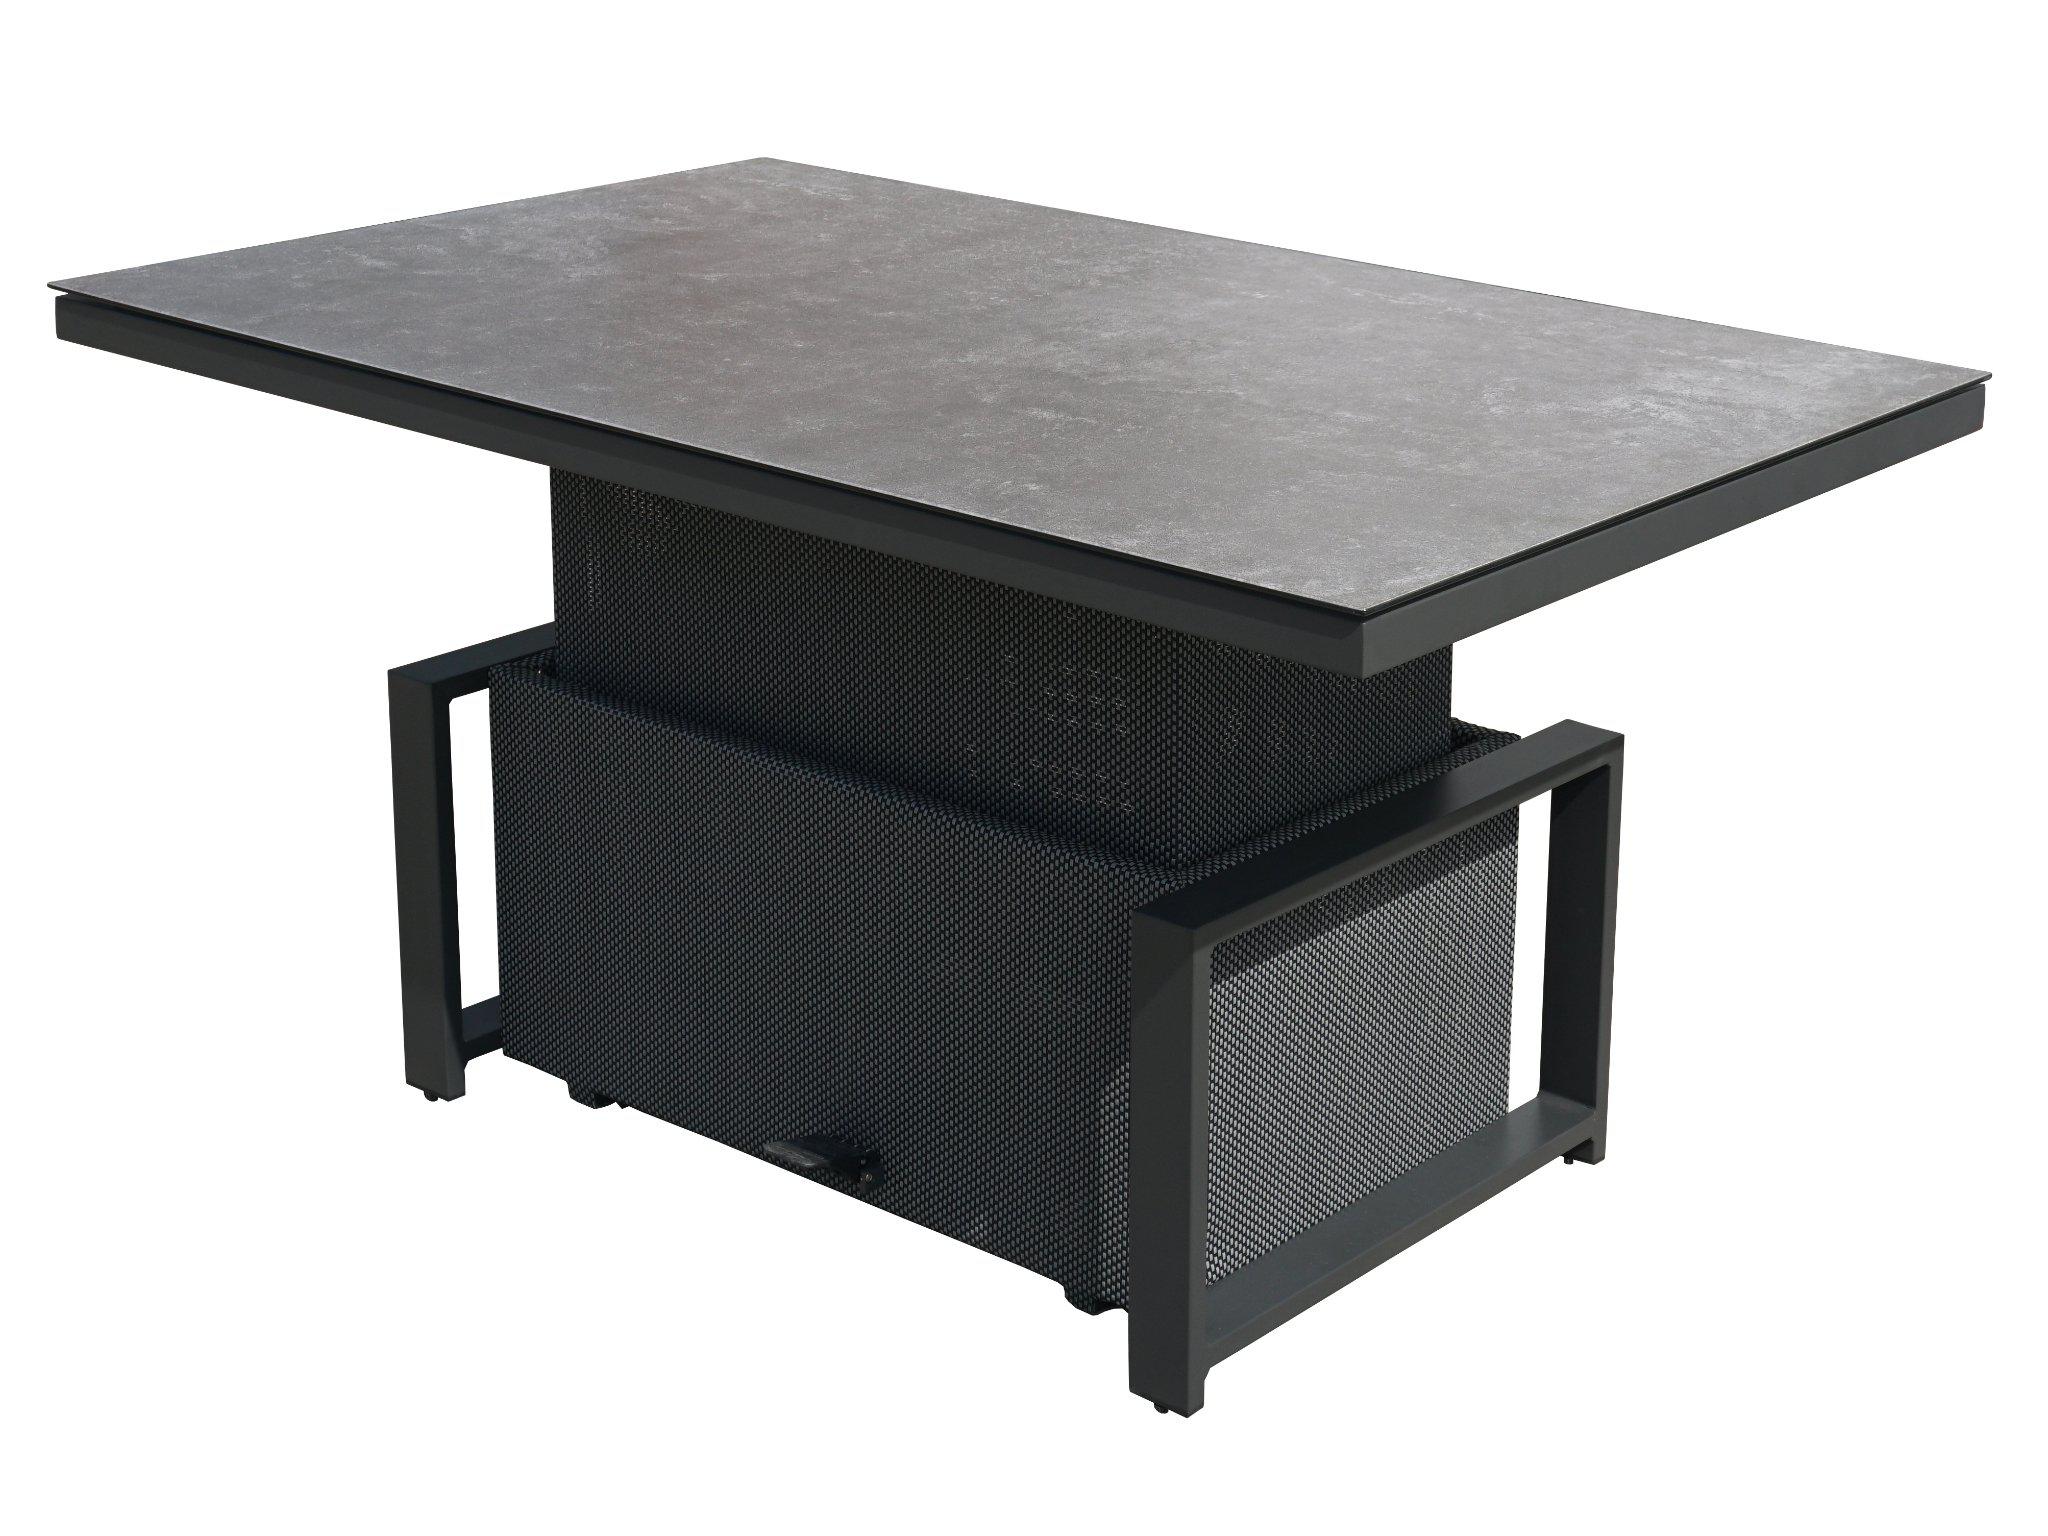 FurnitureOkay Manly Aluminium Outdoor Height Adjustable Table — Charcoal